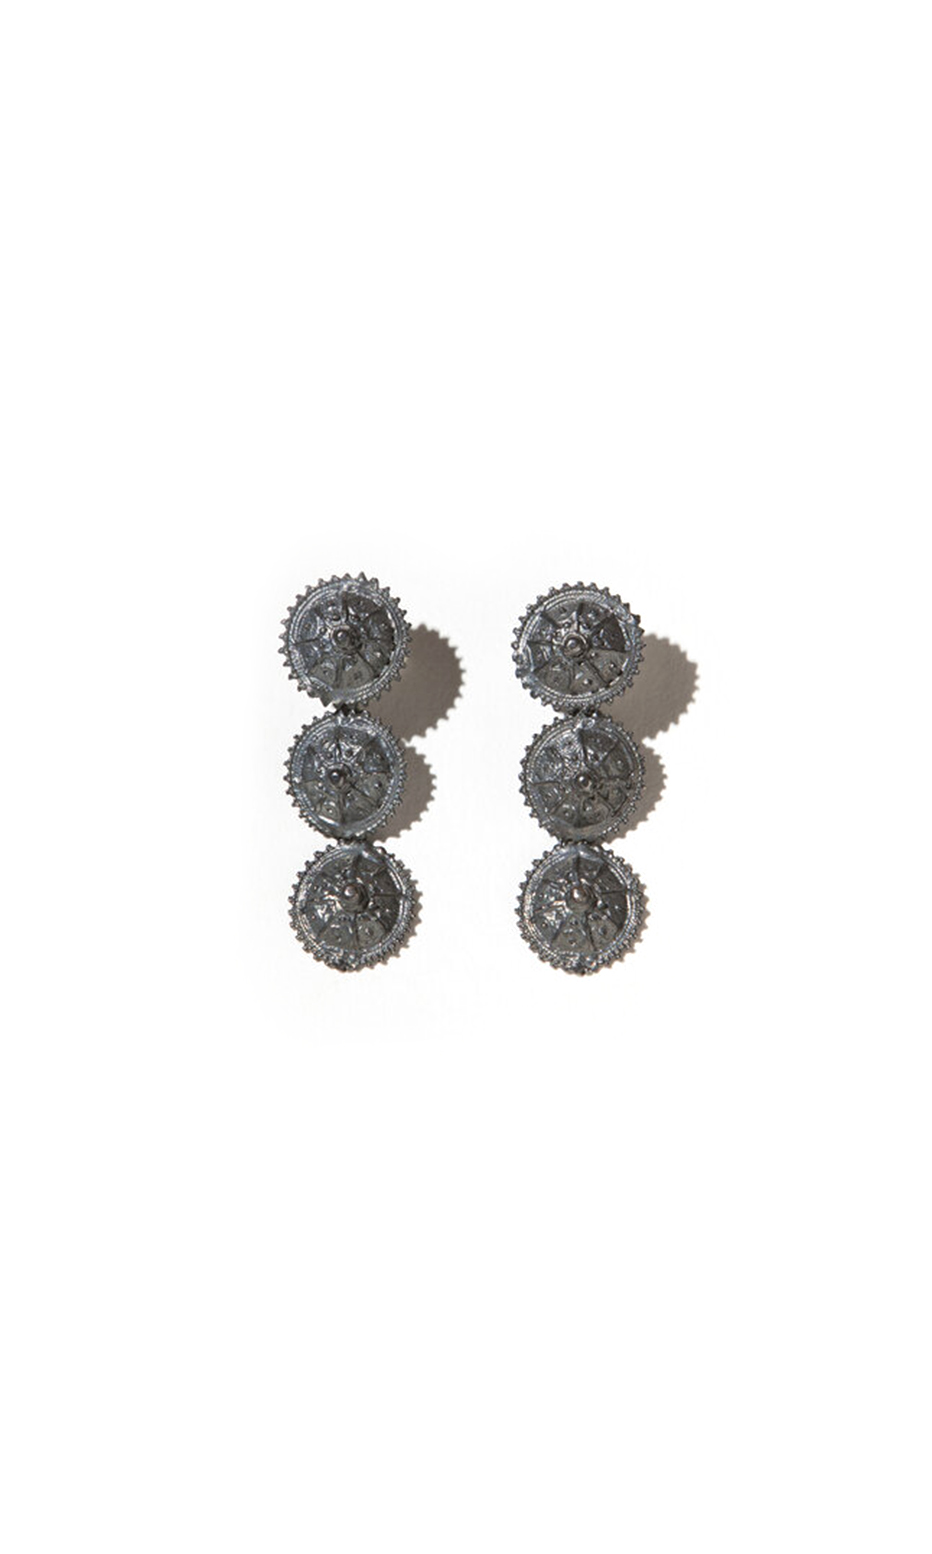 small aurora earrings in oxidized silver